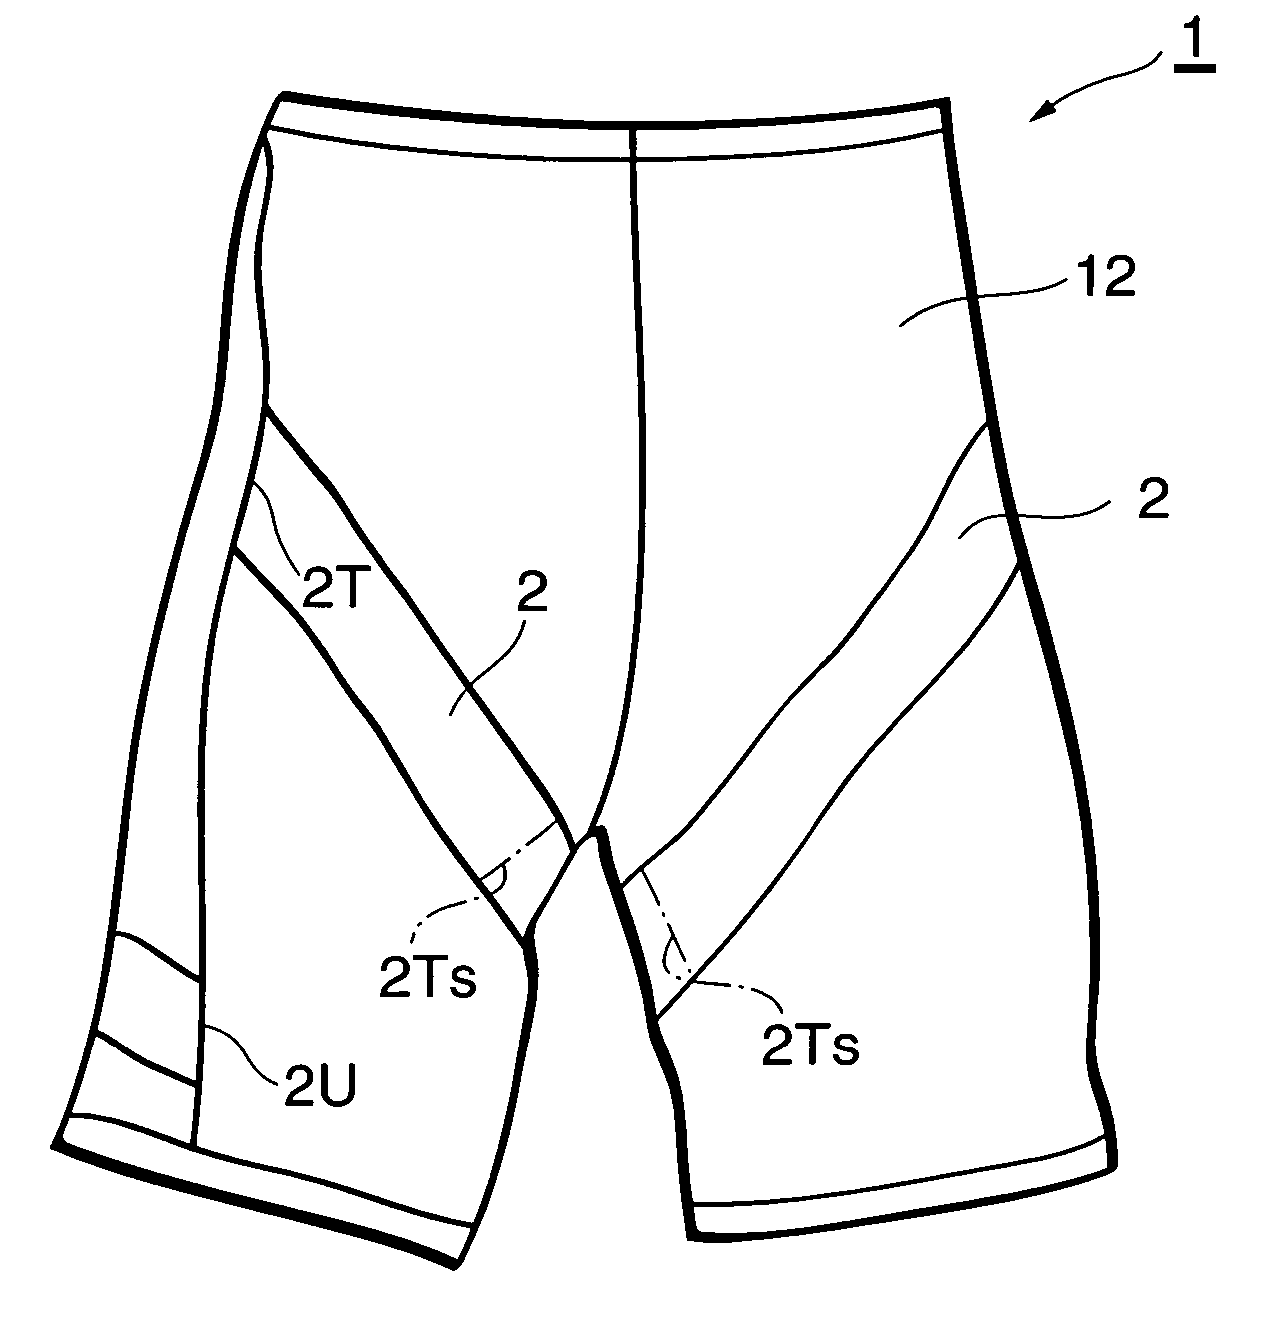 Crotch-possessing garment